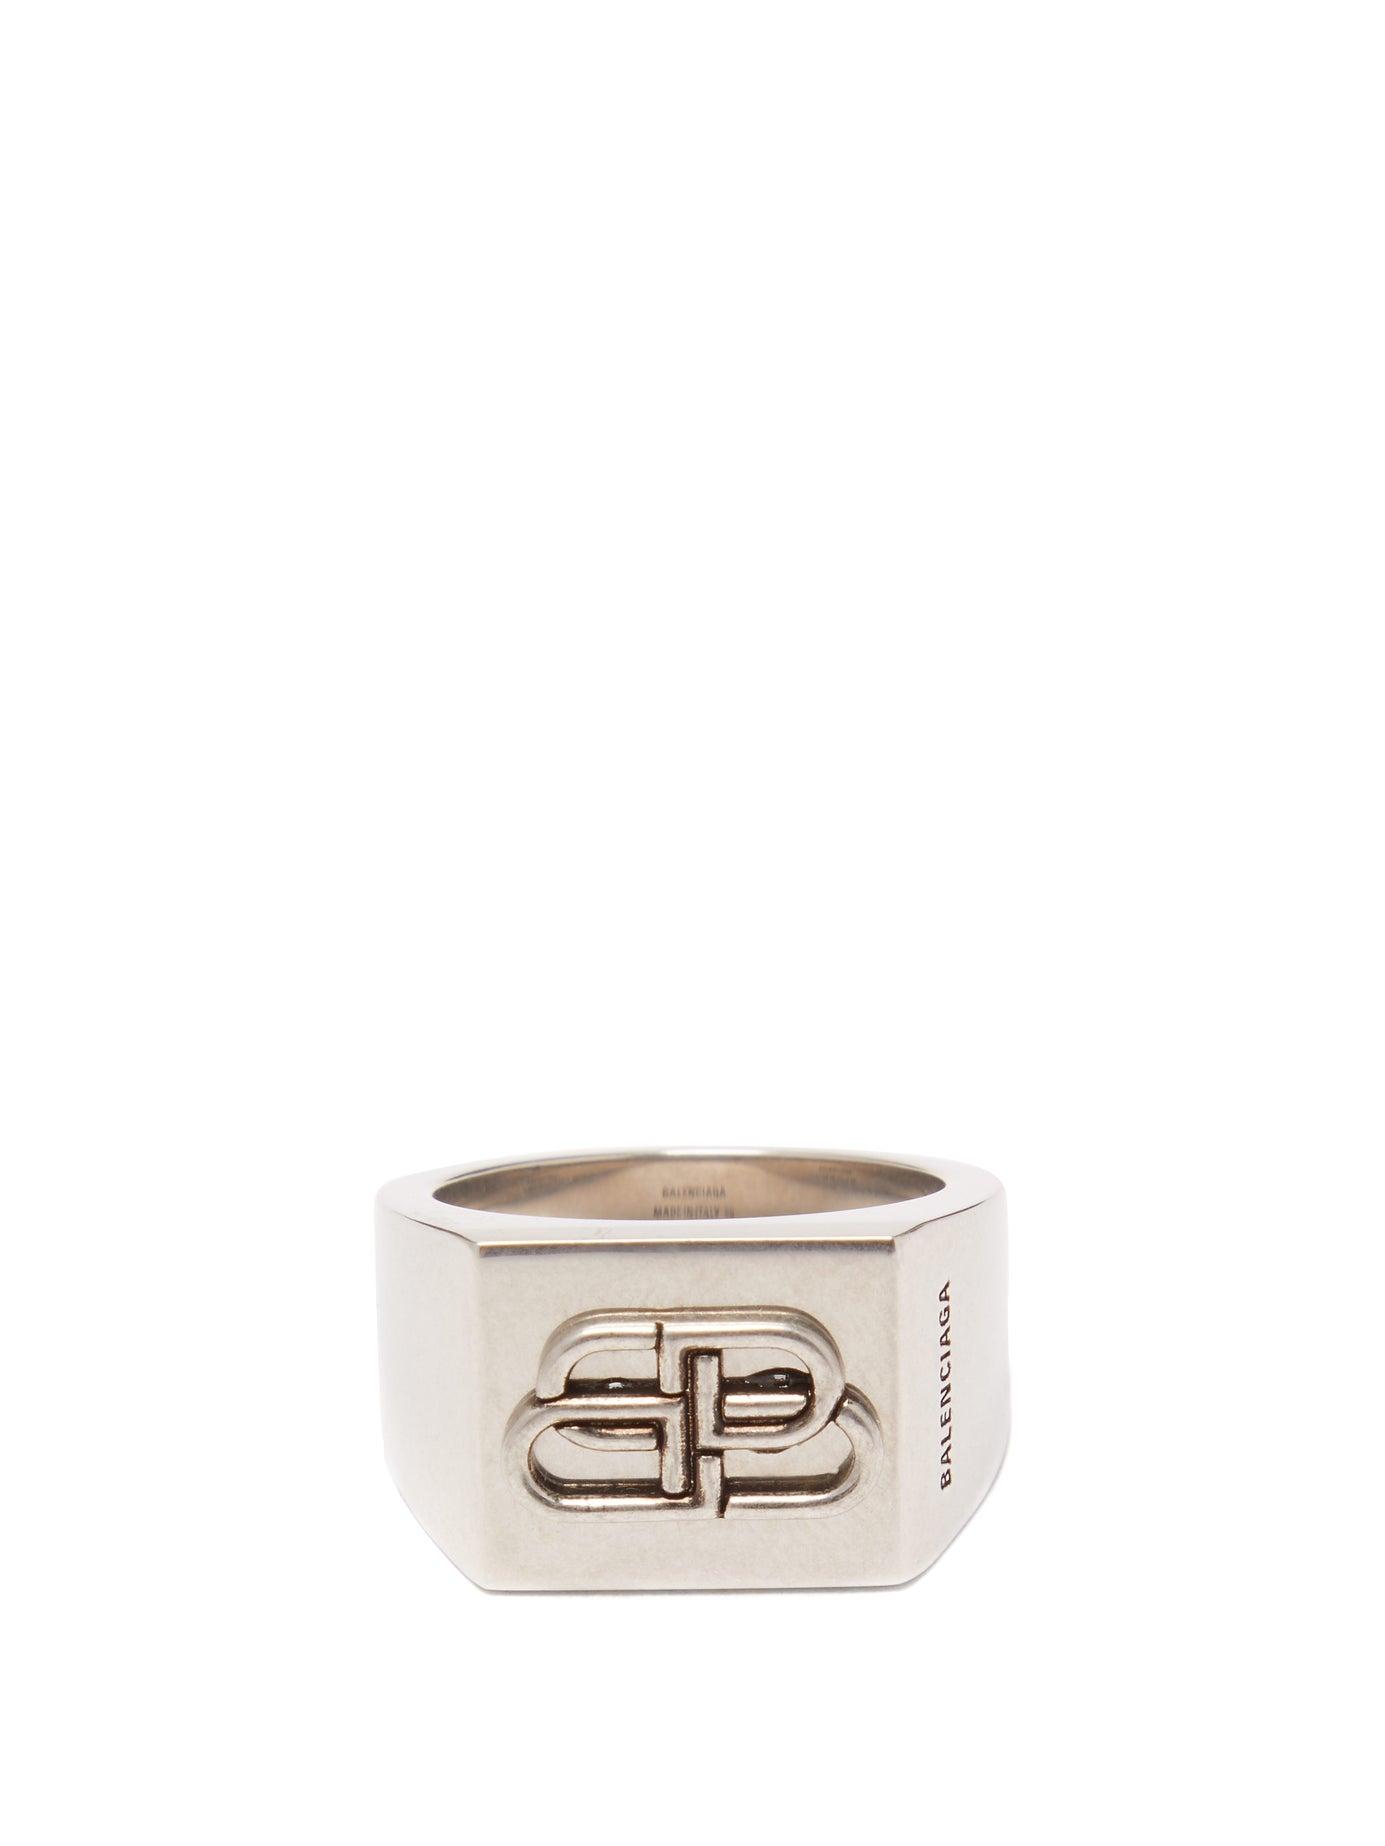 Balenciaga Bb-logo Ring in Metallic for Men | Lyst